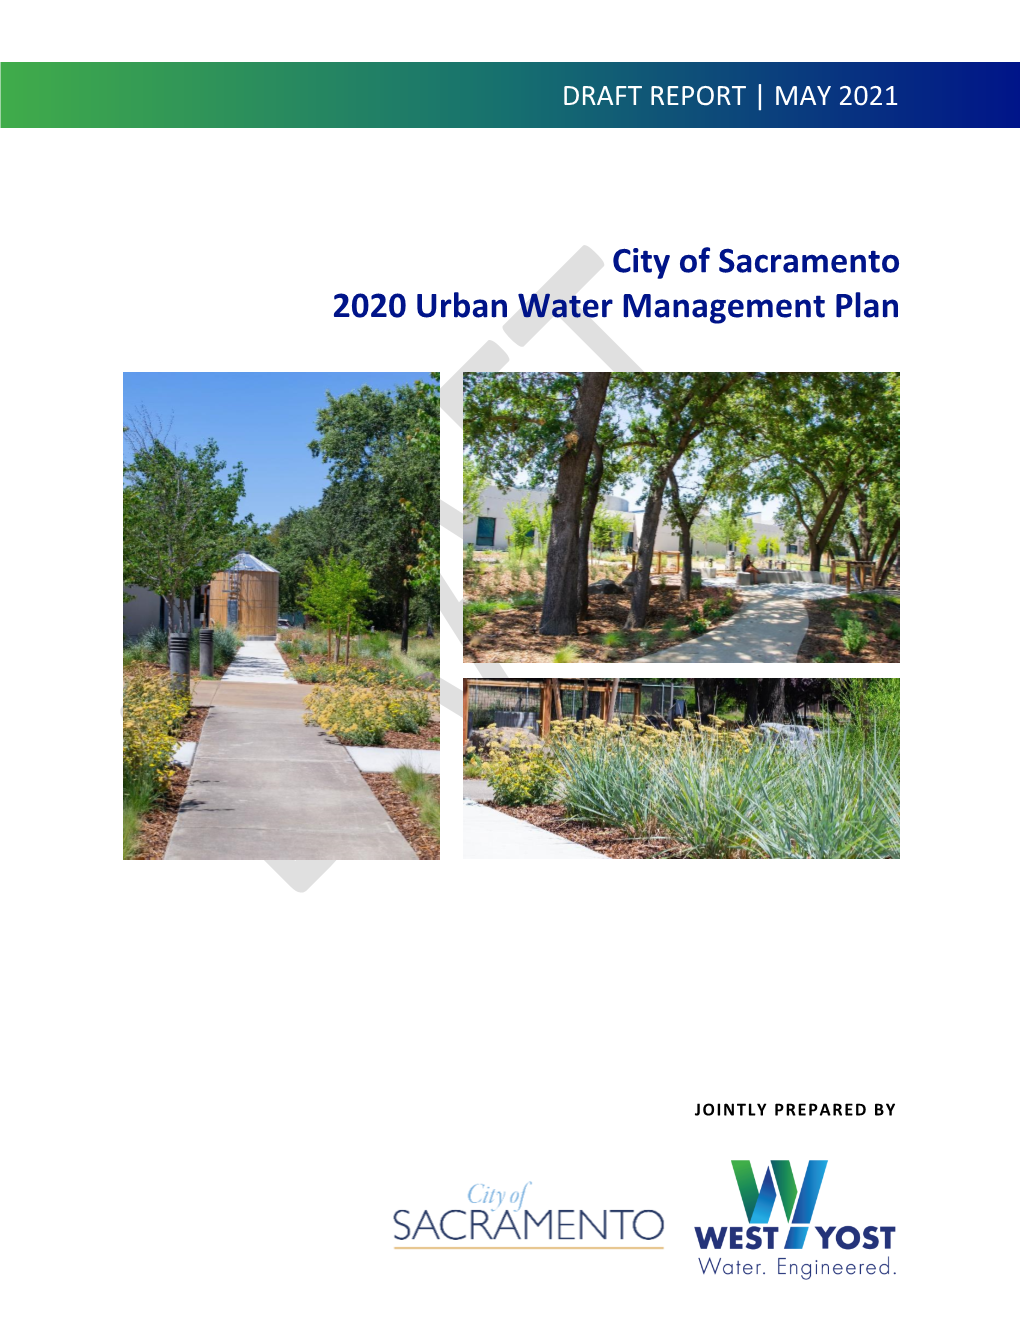 City of Sacramento 2020 Urban Water Management Plan